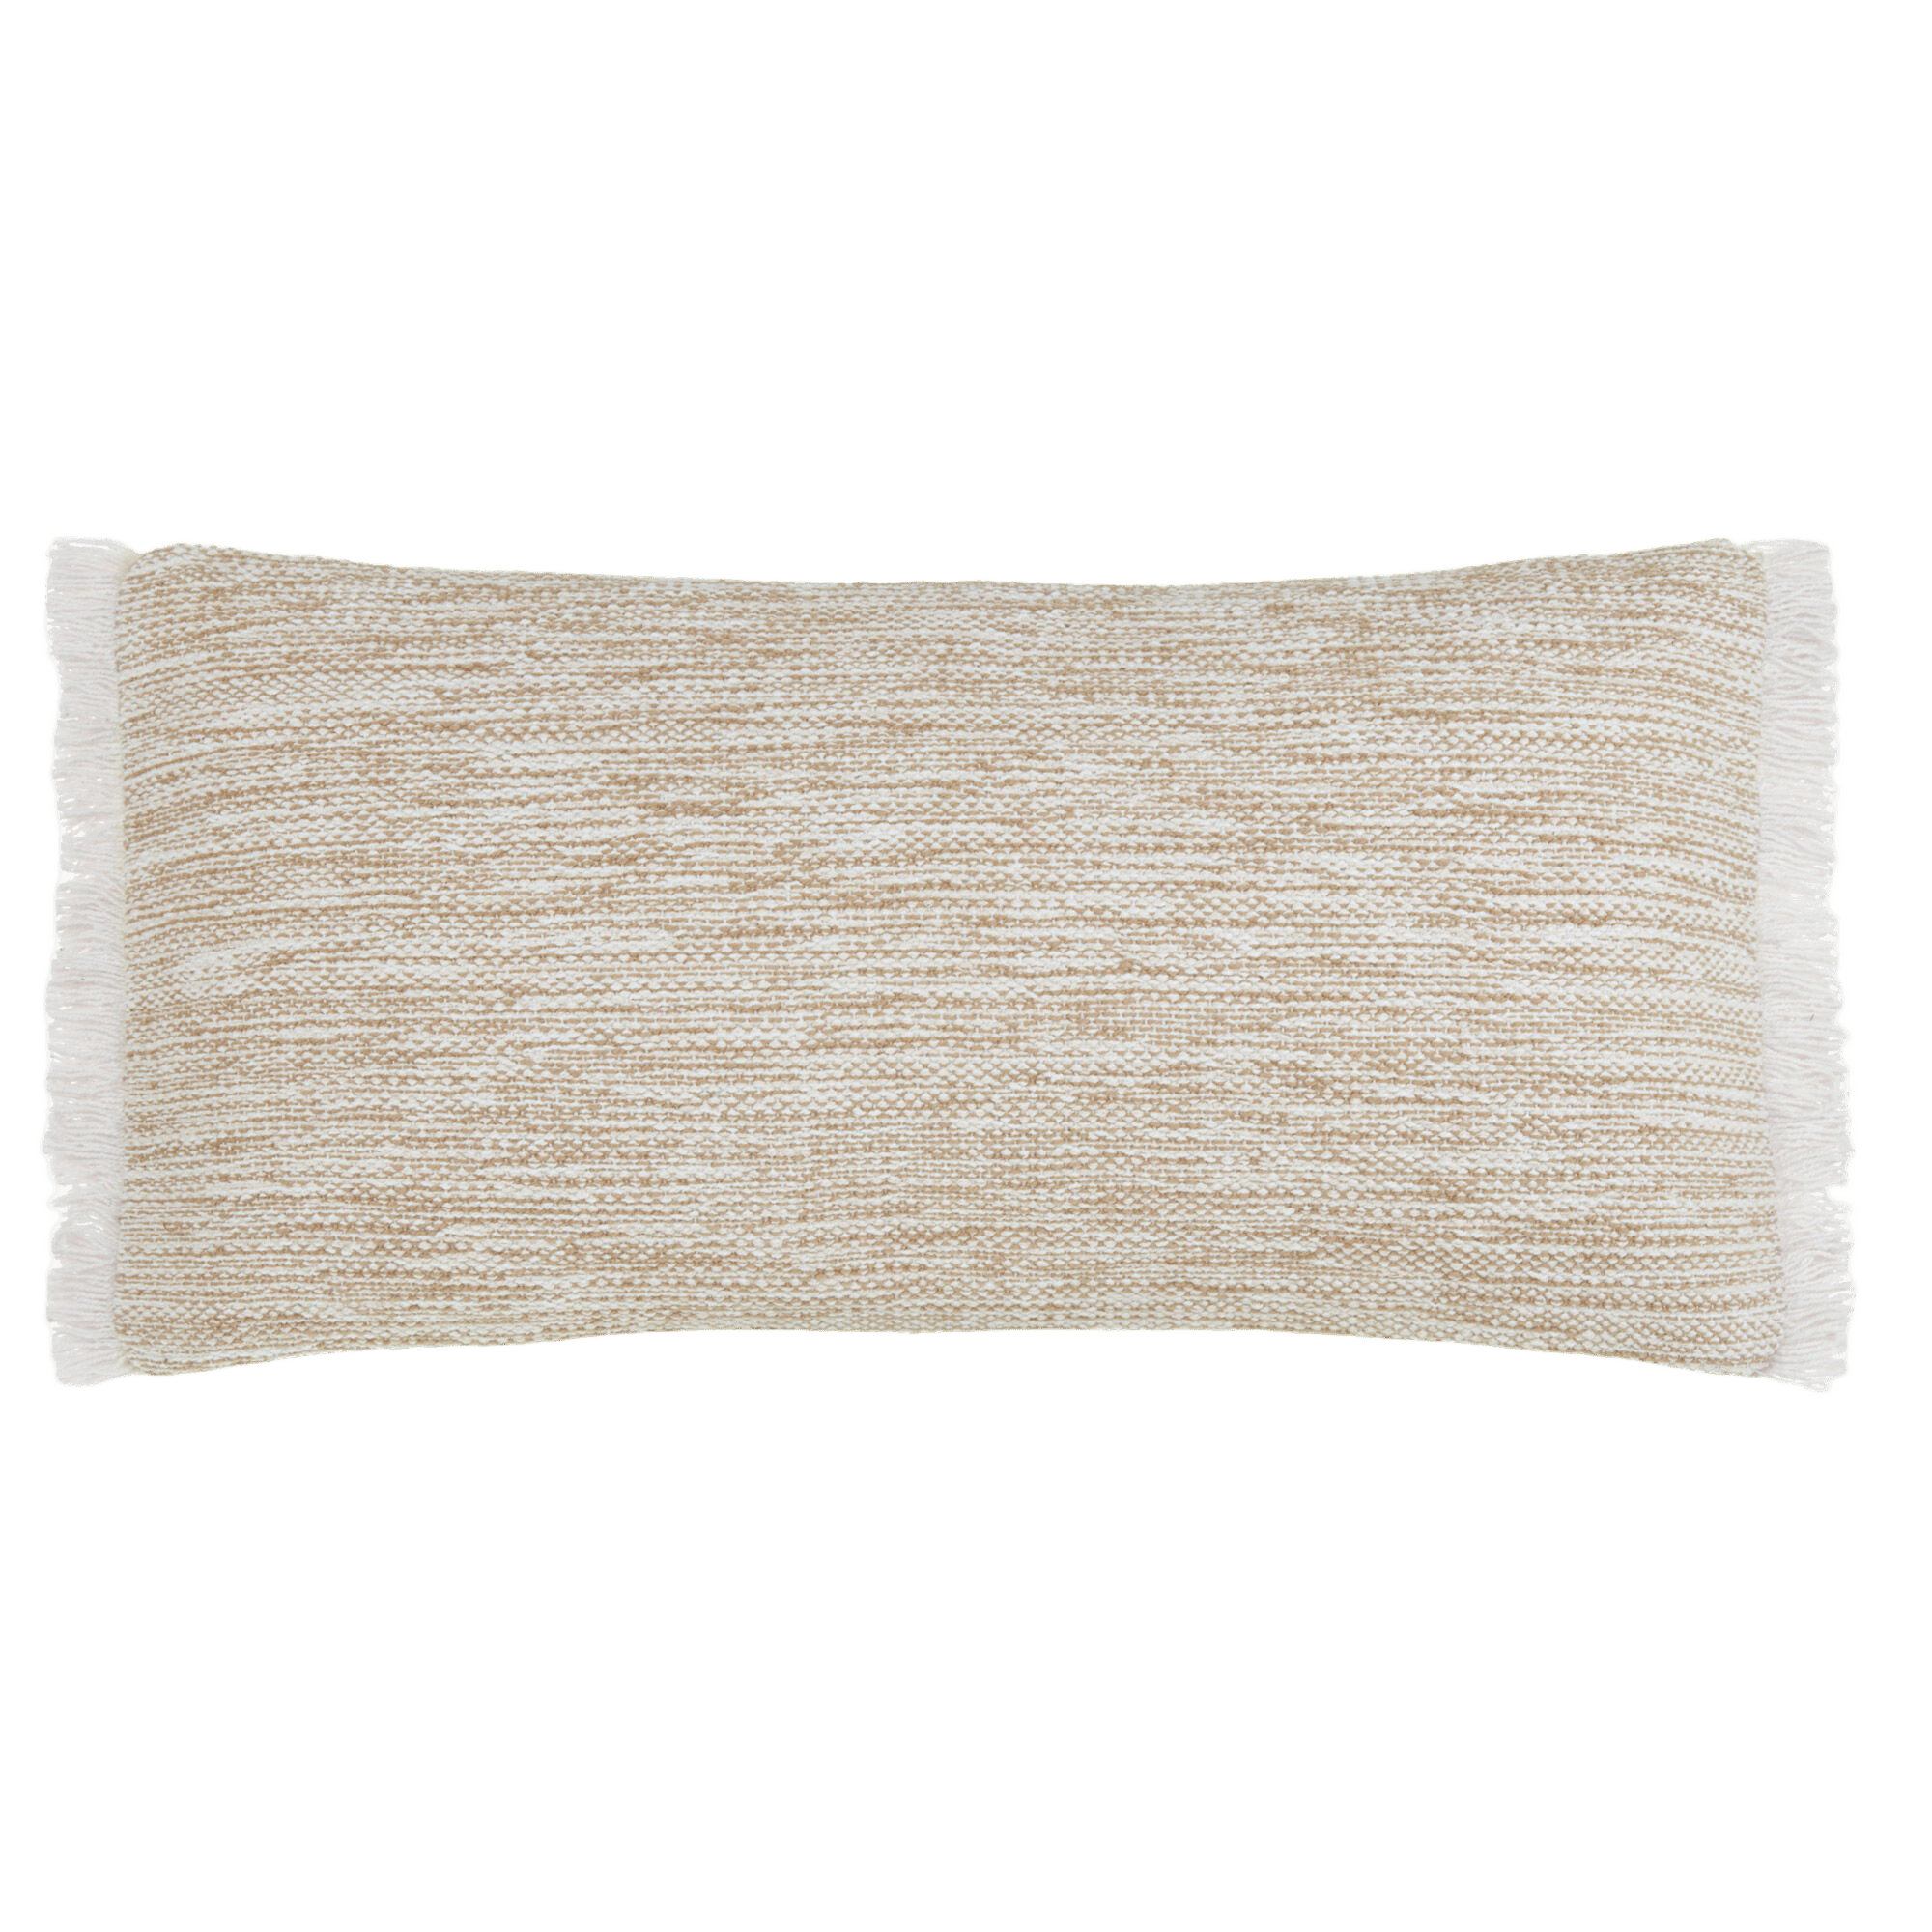 Mekell Decorative Lumbar Pillow with Fringe 